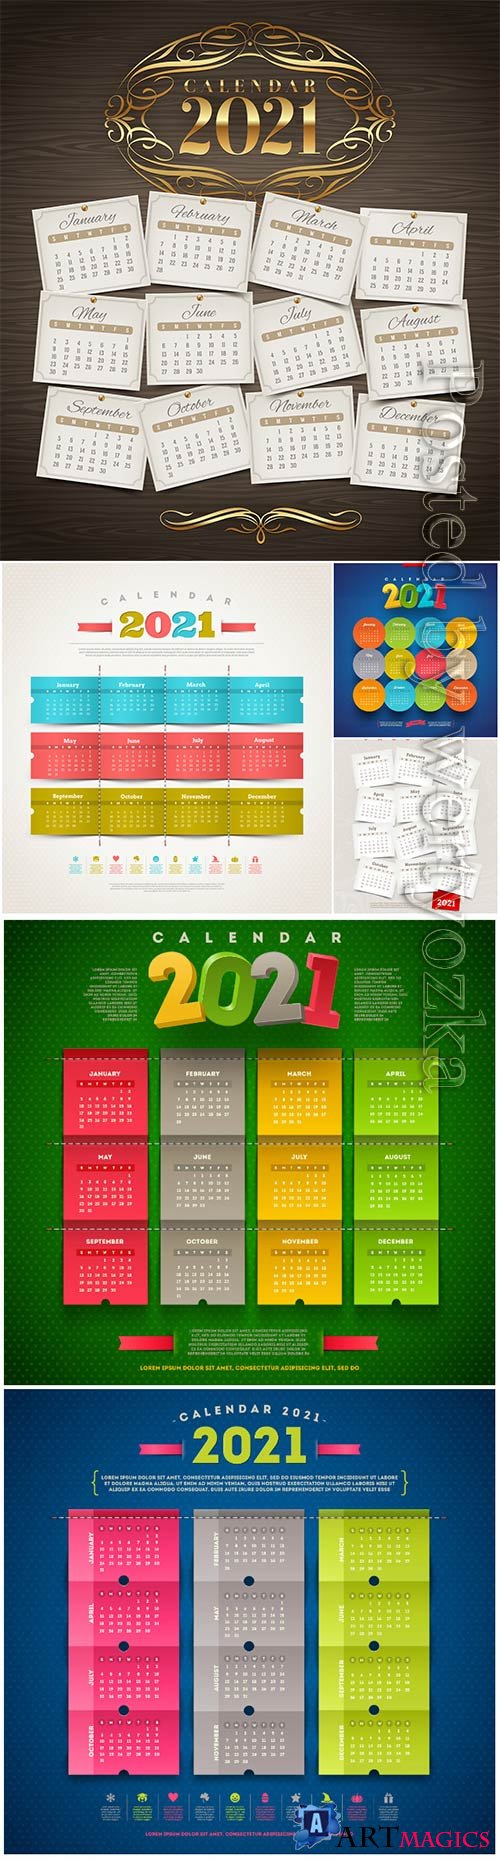 Calendar for 2021 year template vector design